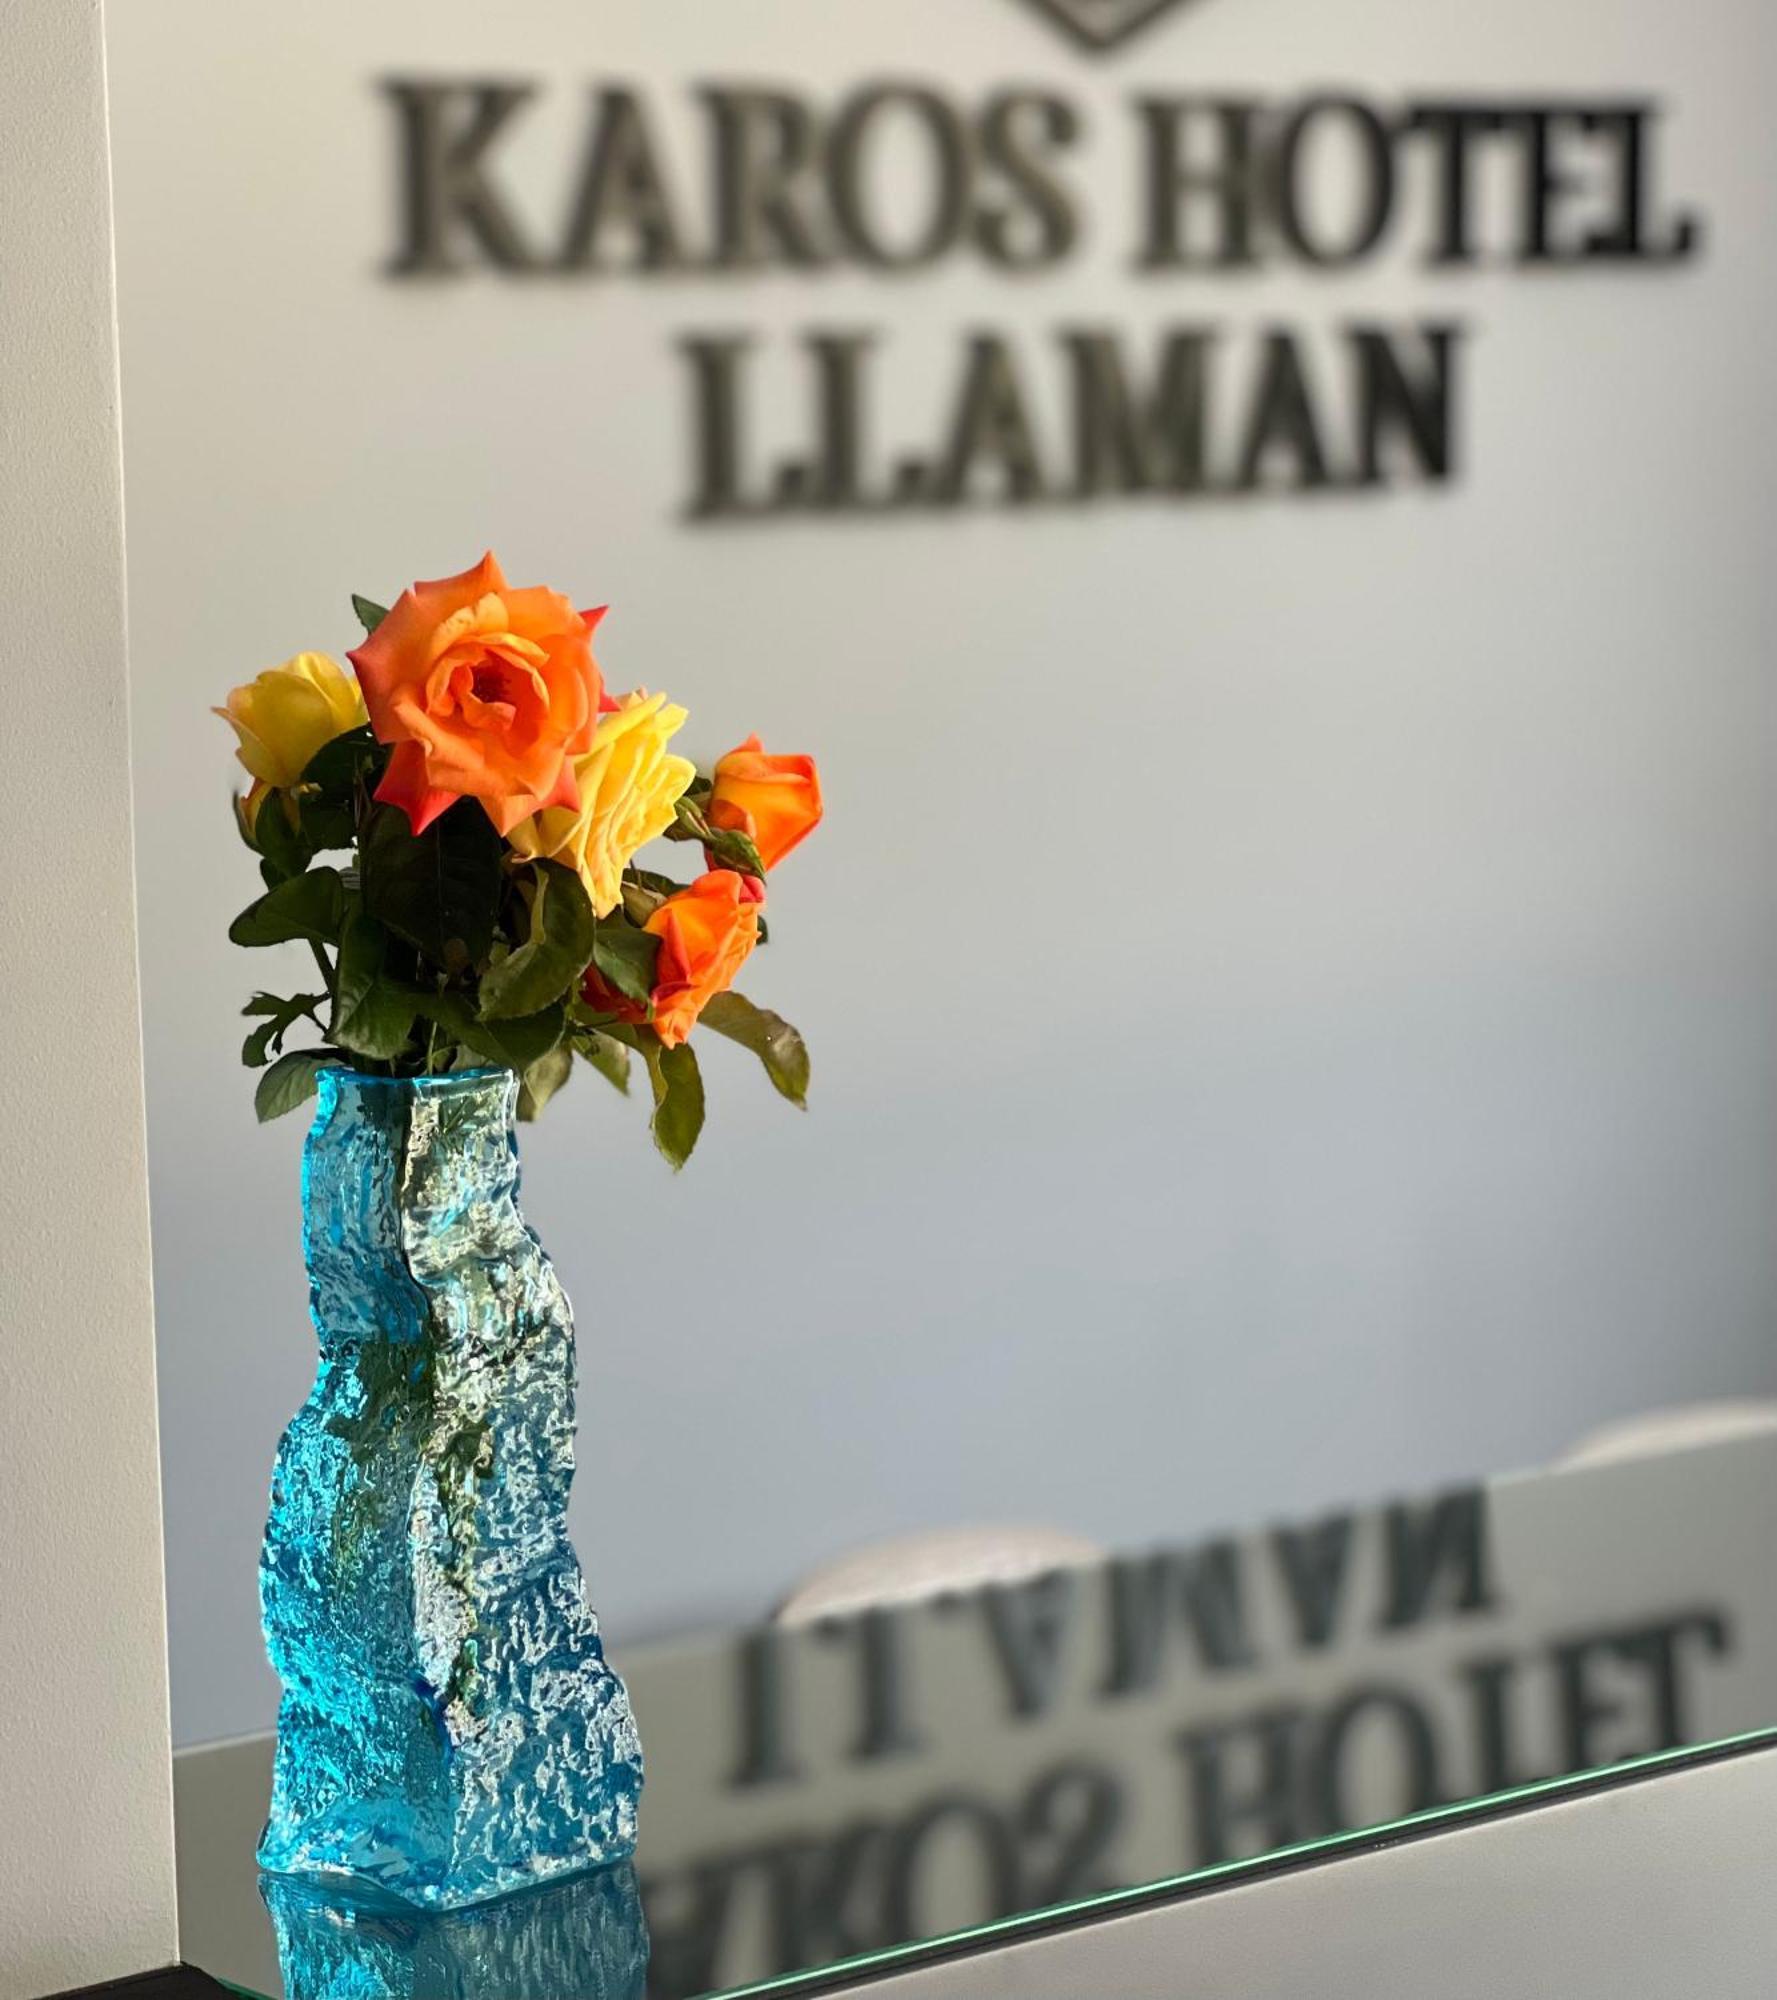 Karos Hotel Llaman 希马拉 外观 照片